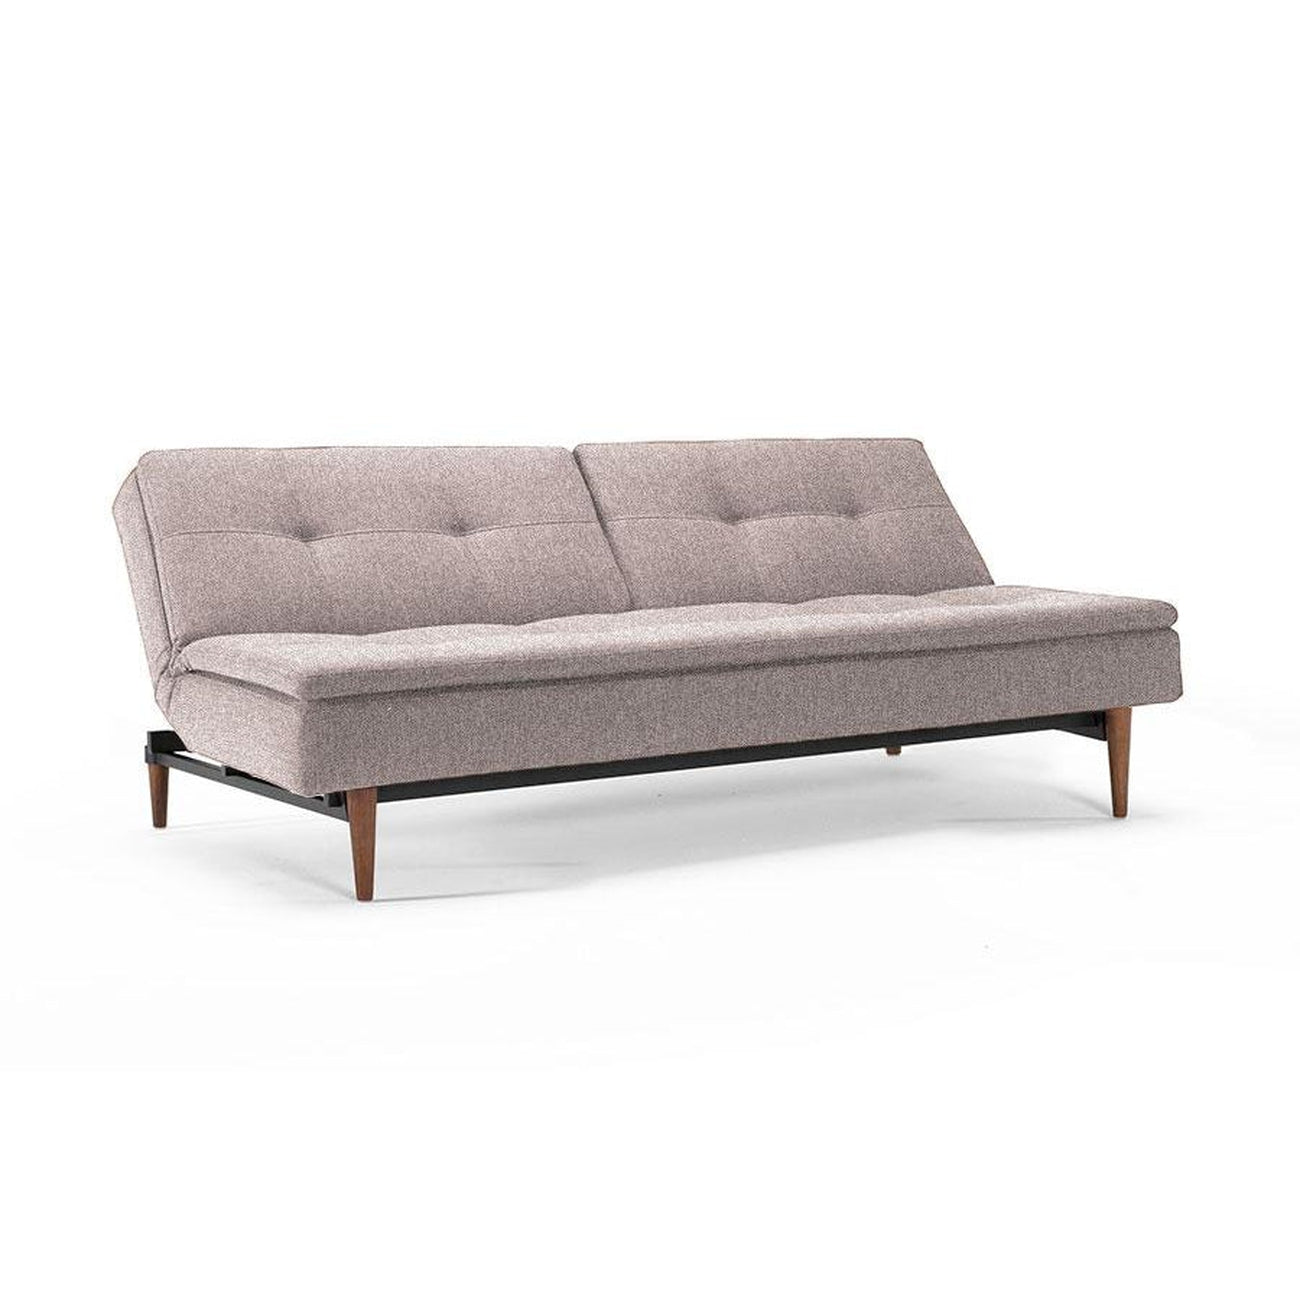 Dublexo Deluxe Sofa,DARK WOOD-Innovation Living-INNO-94-741050521-10-3-2-SofasGrey-10-France and Son